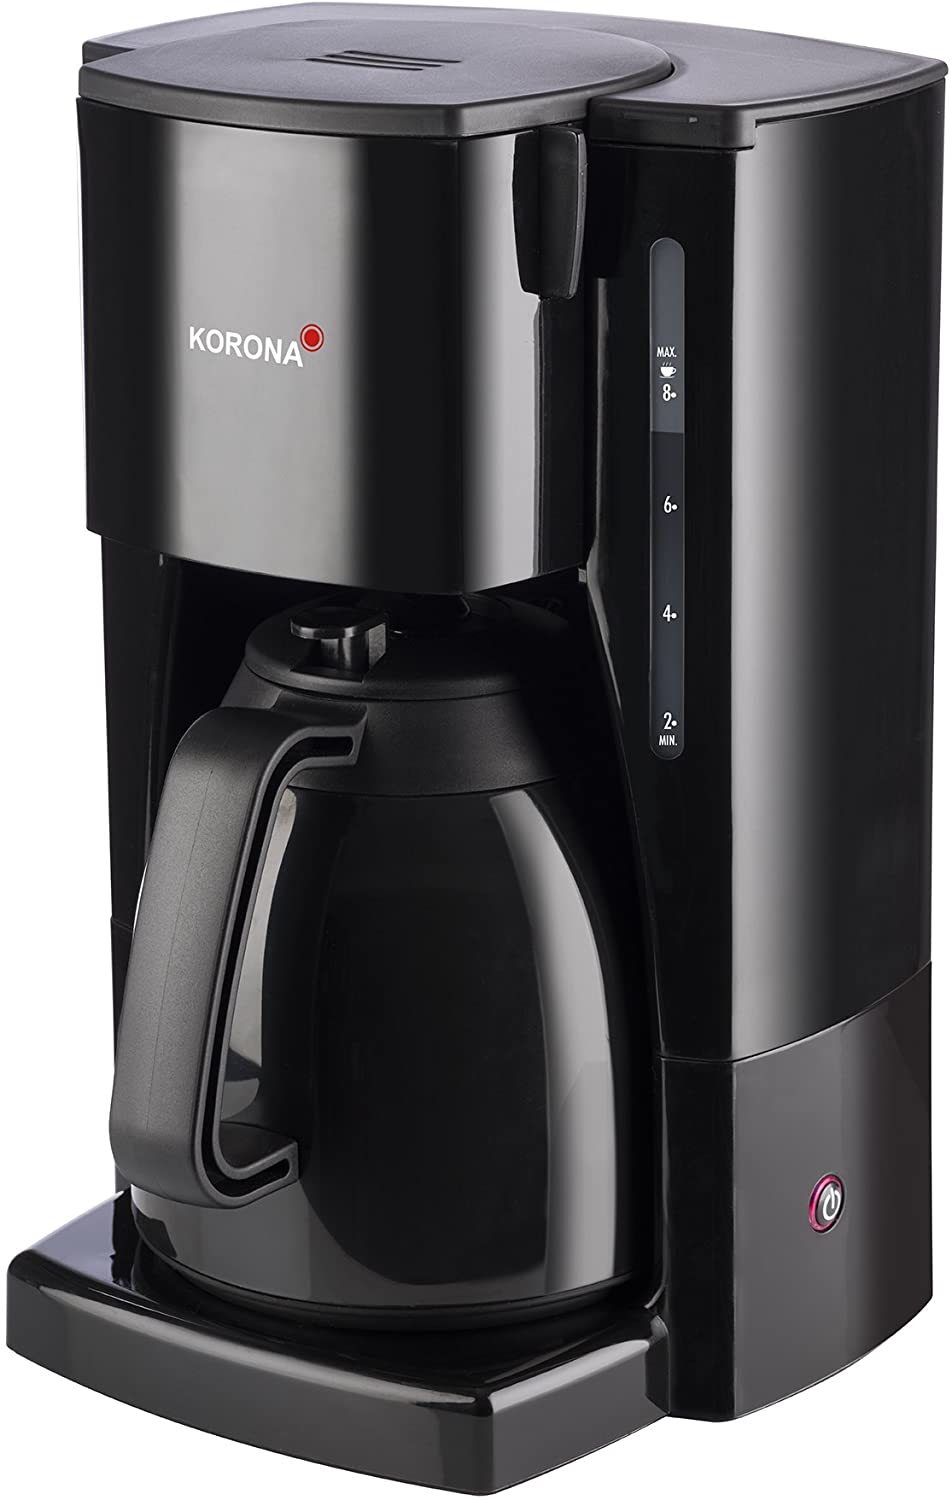 Korona 10411 Coffee Machine with Thermal Jug - Filter Coffee Machine with Capacity for 8 Cups of Coffee